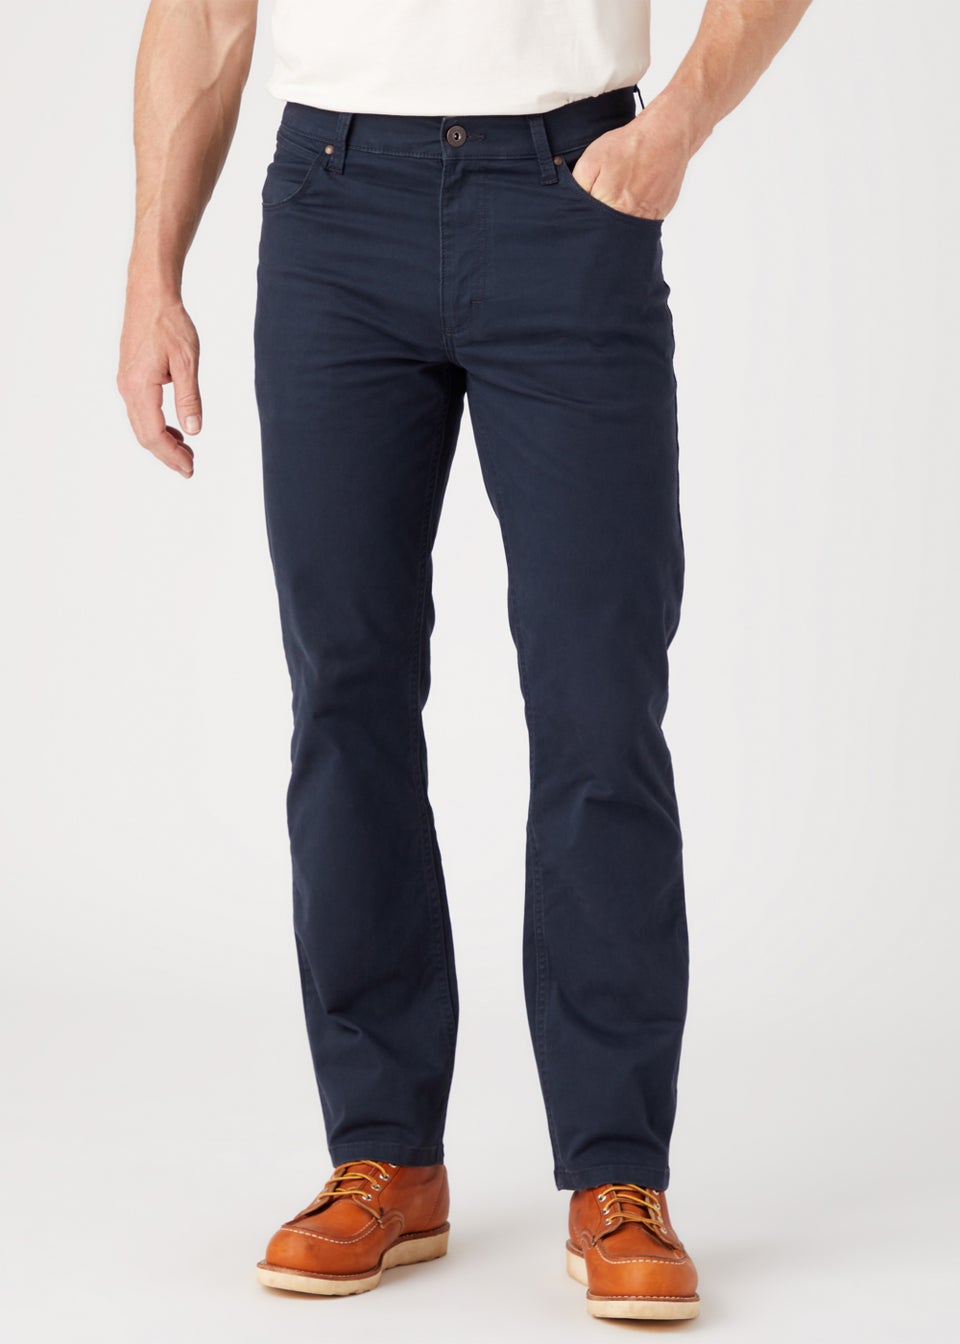 Wrangler Navy Straight Fit Jeans - Matalan